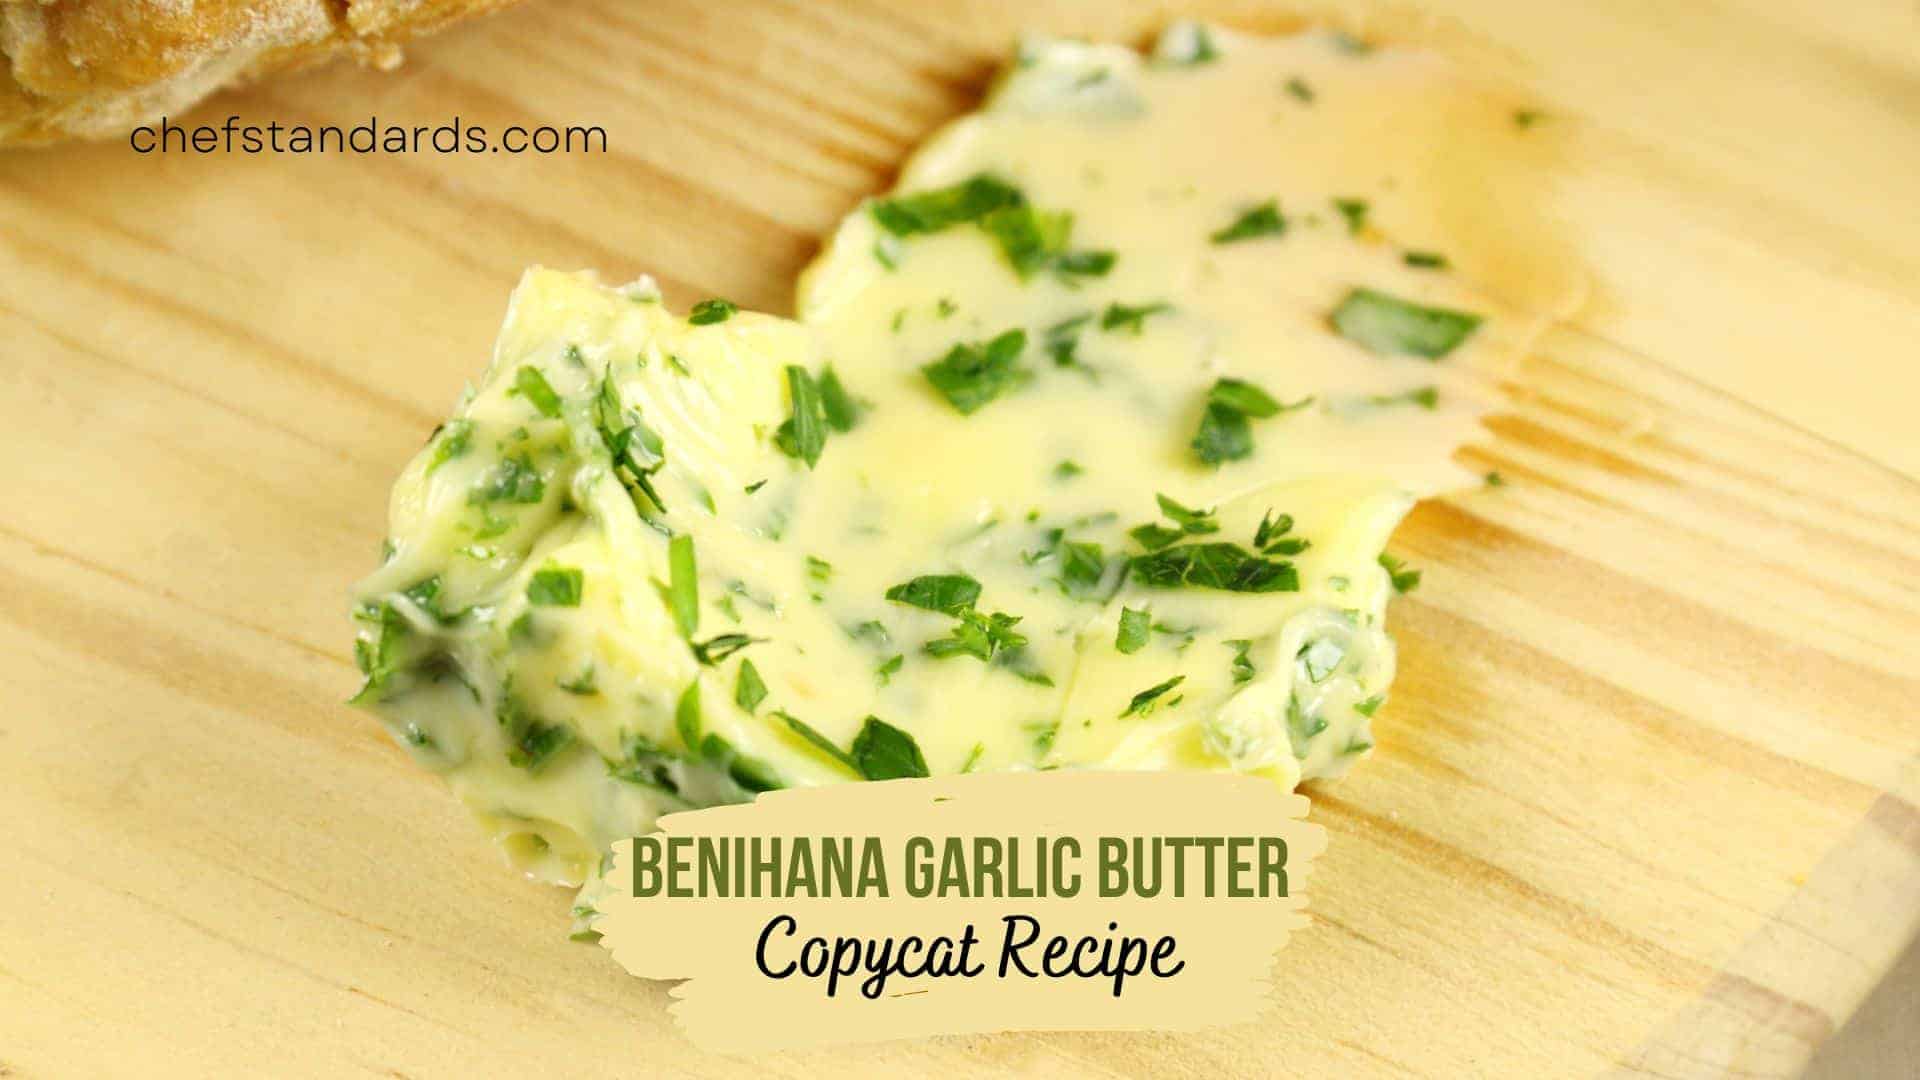 Benihana Garlic Butter Copycat Recipe